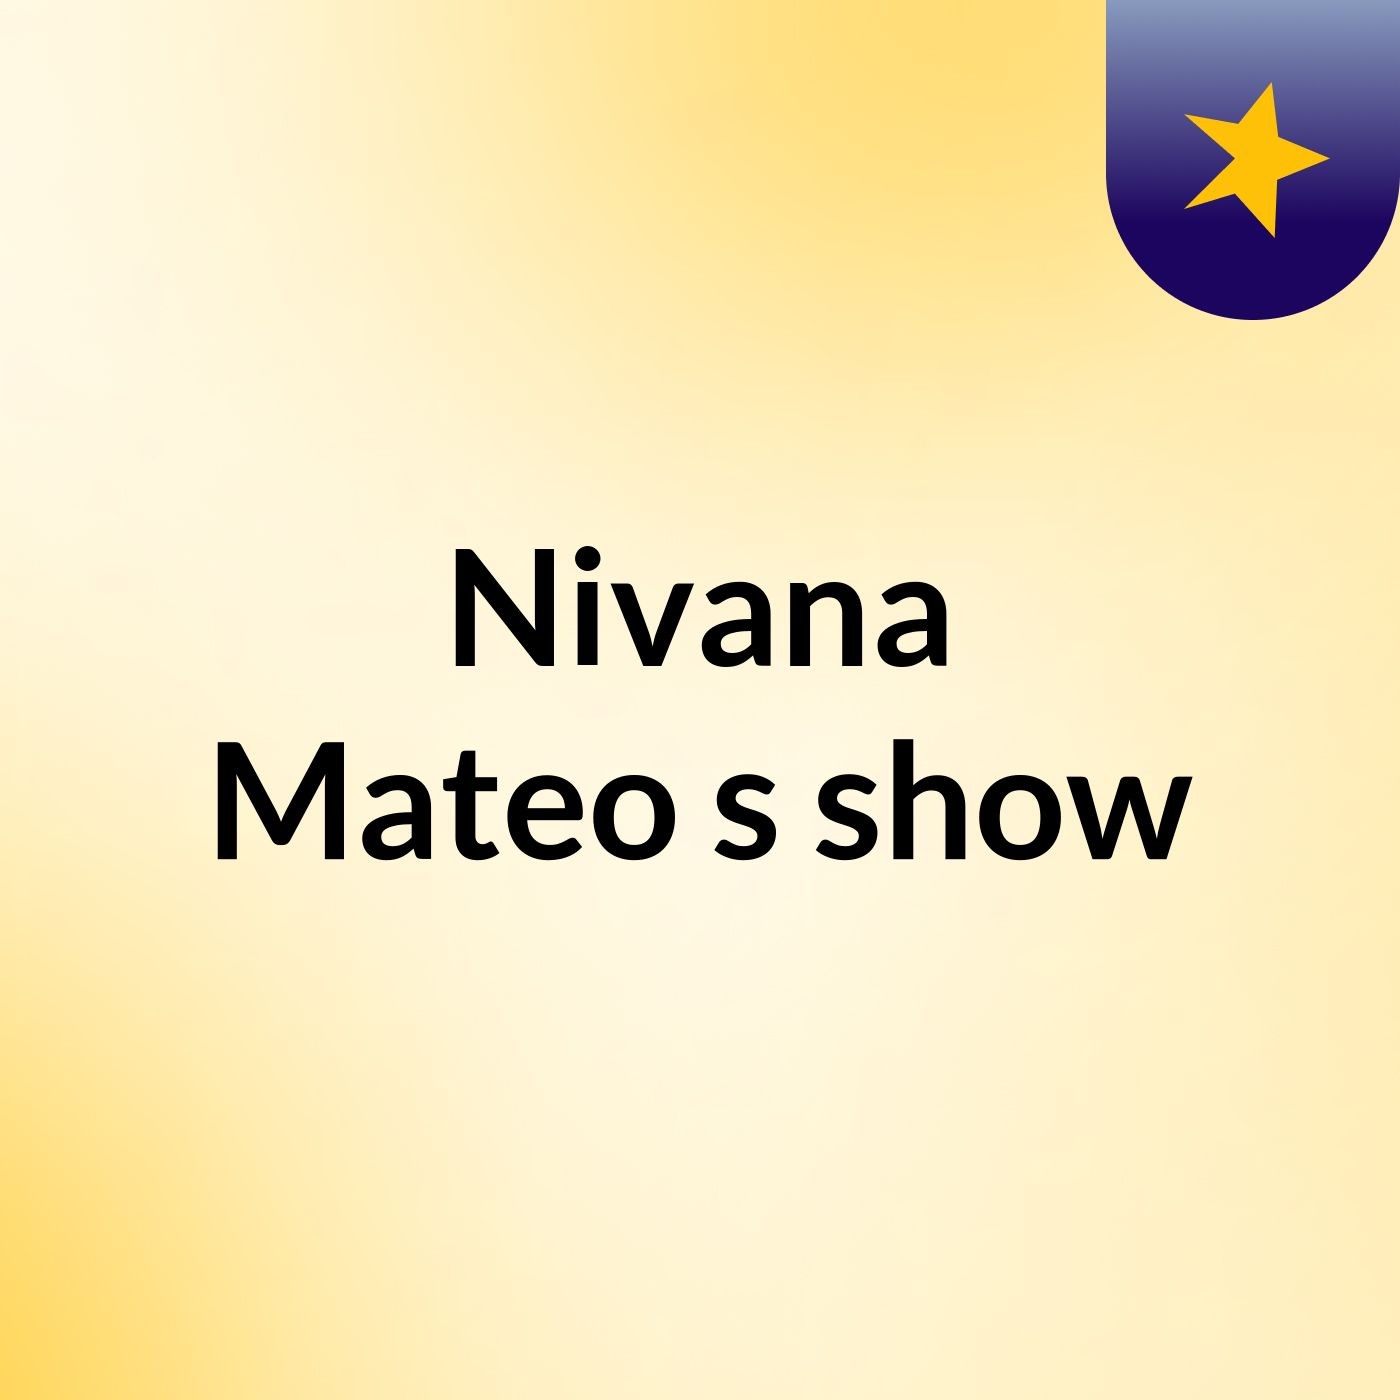 Nivana Mateo's show